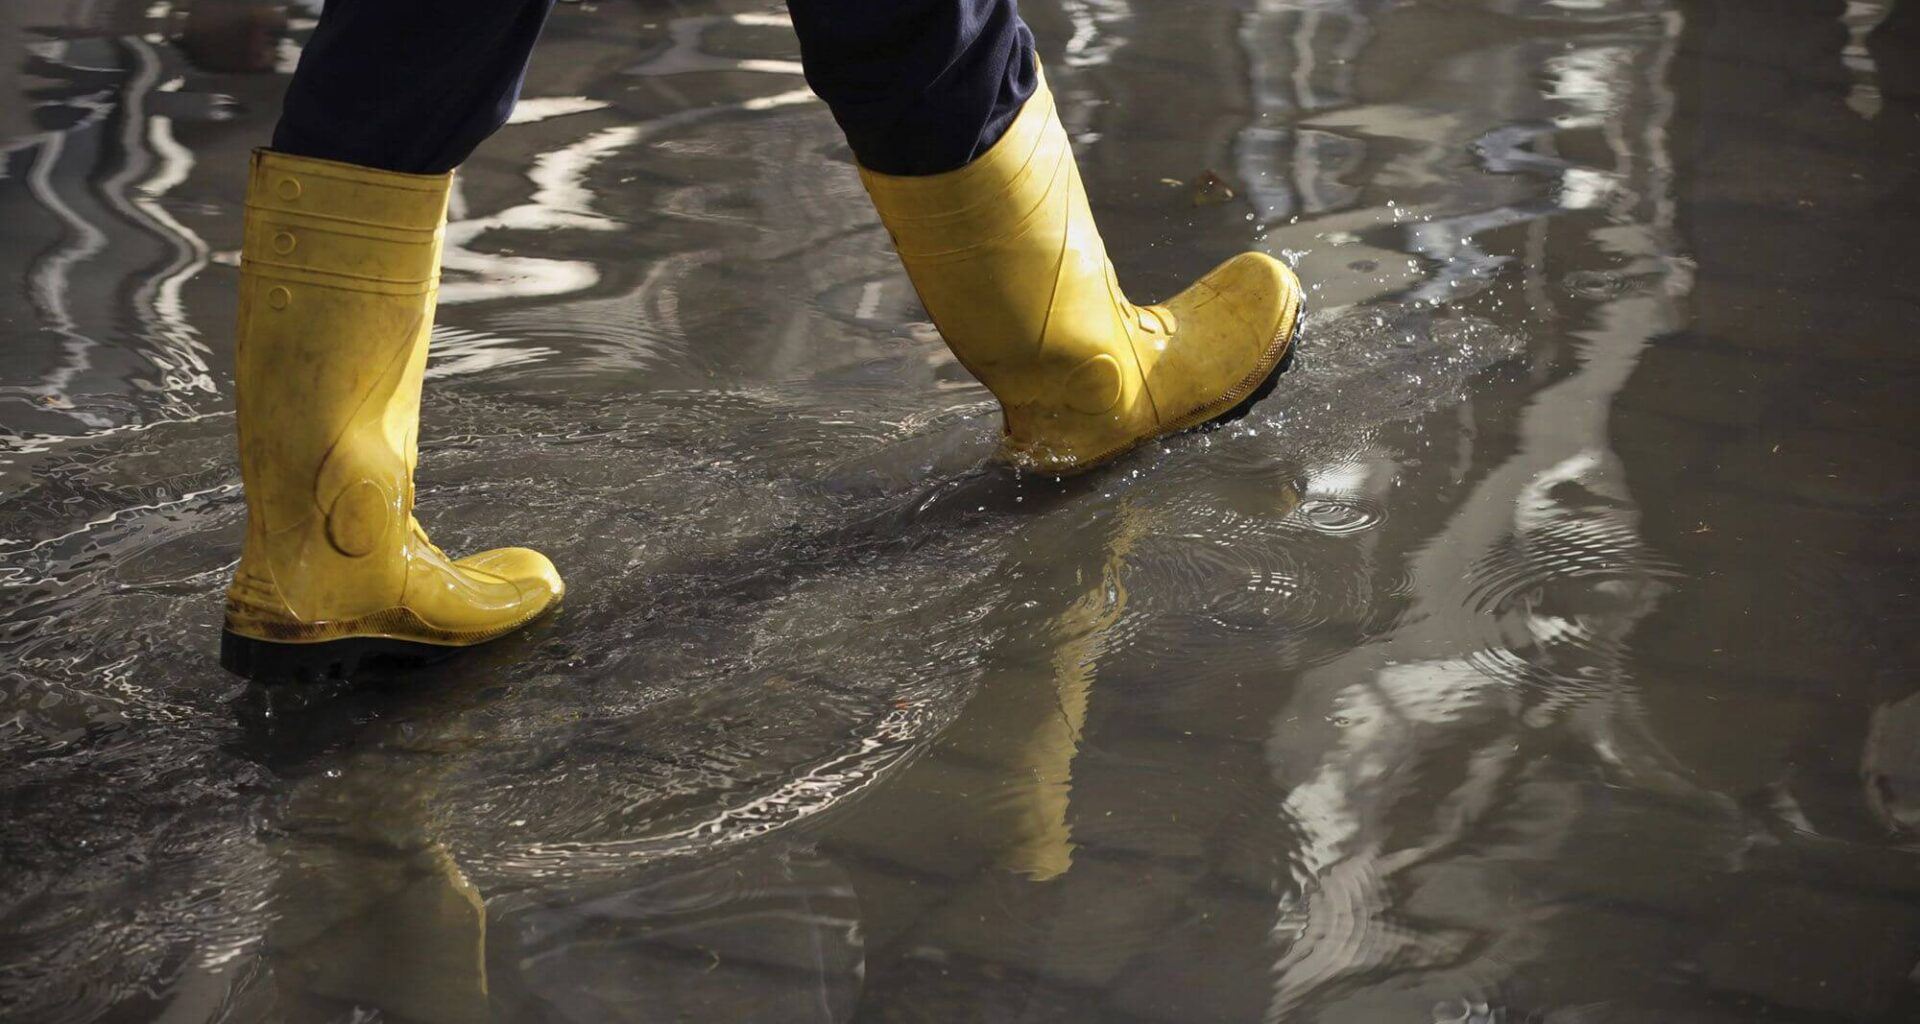 seguro cobre enchente: bota de plástico andando em ambiente alagado